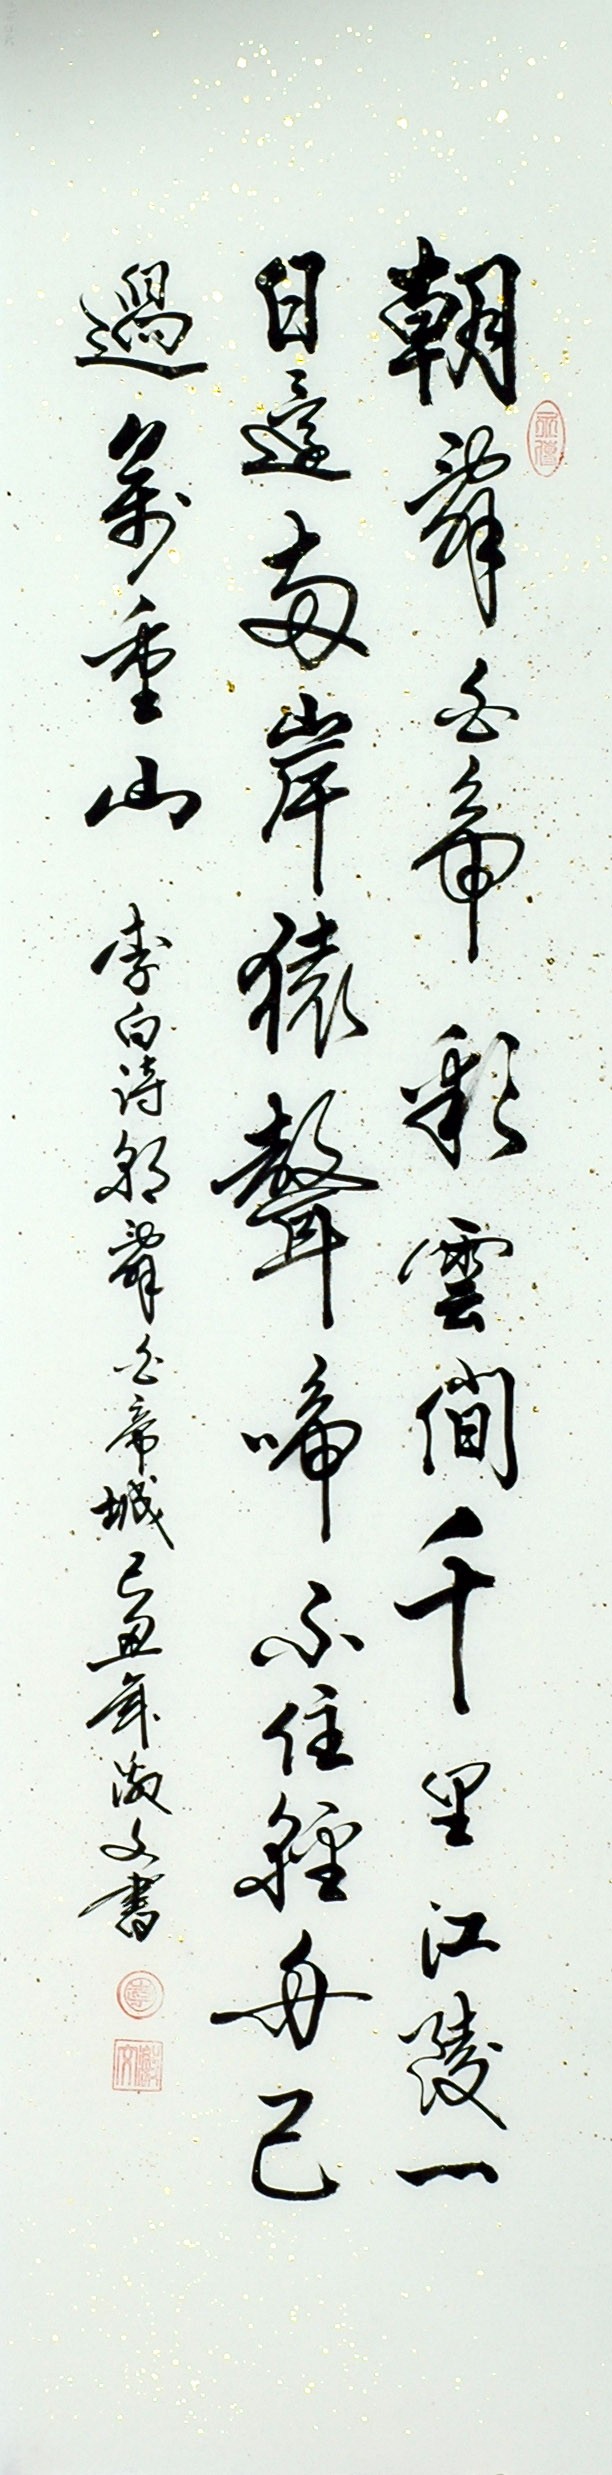 Chinese Cursive Scripts Painting - CNAG010951